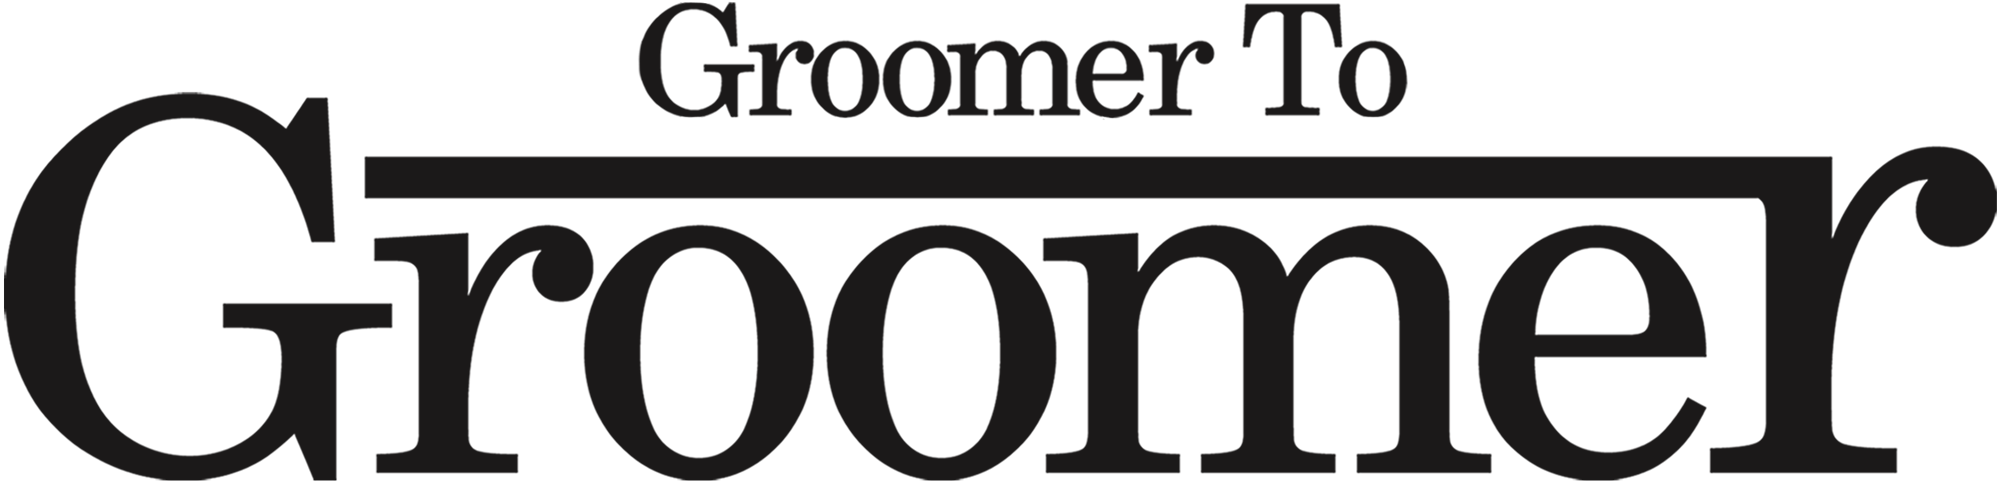 Groomer to Groomer logo